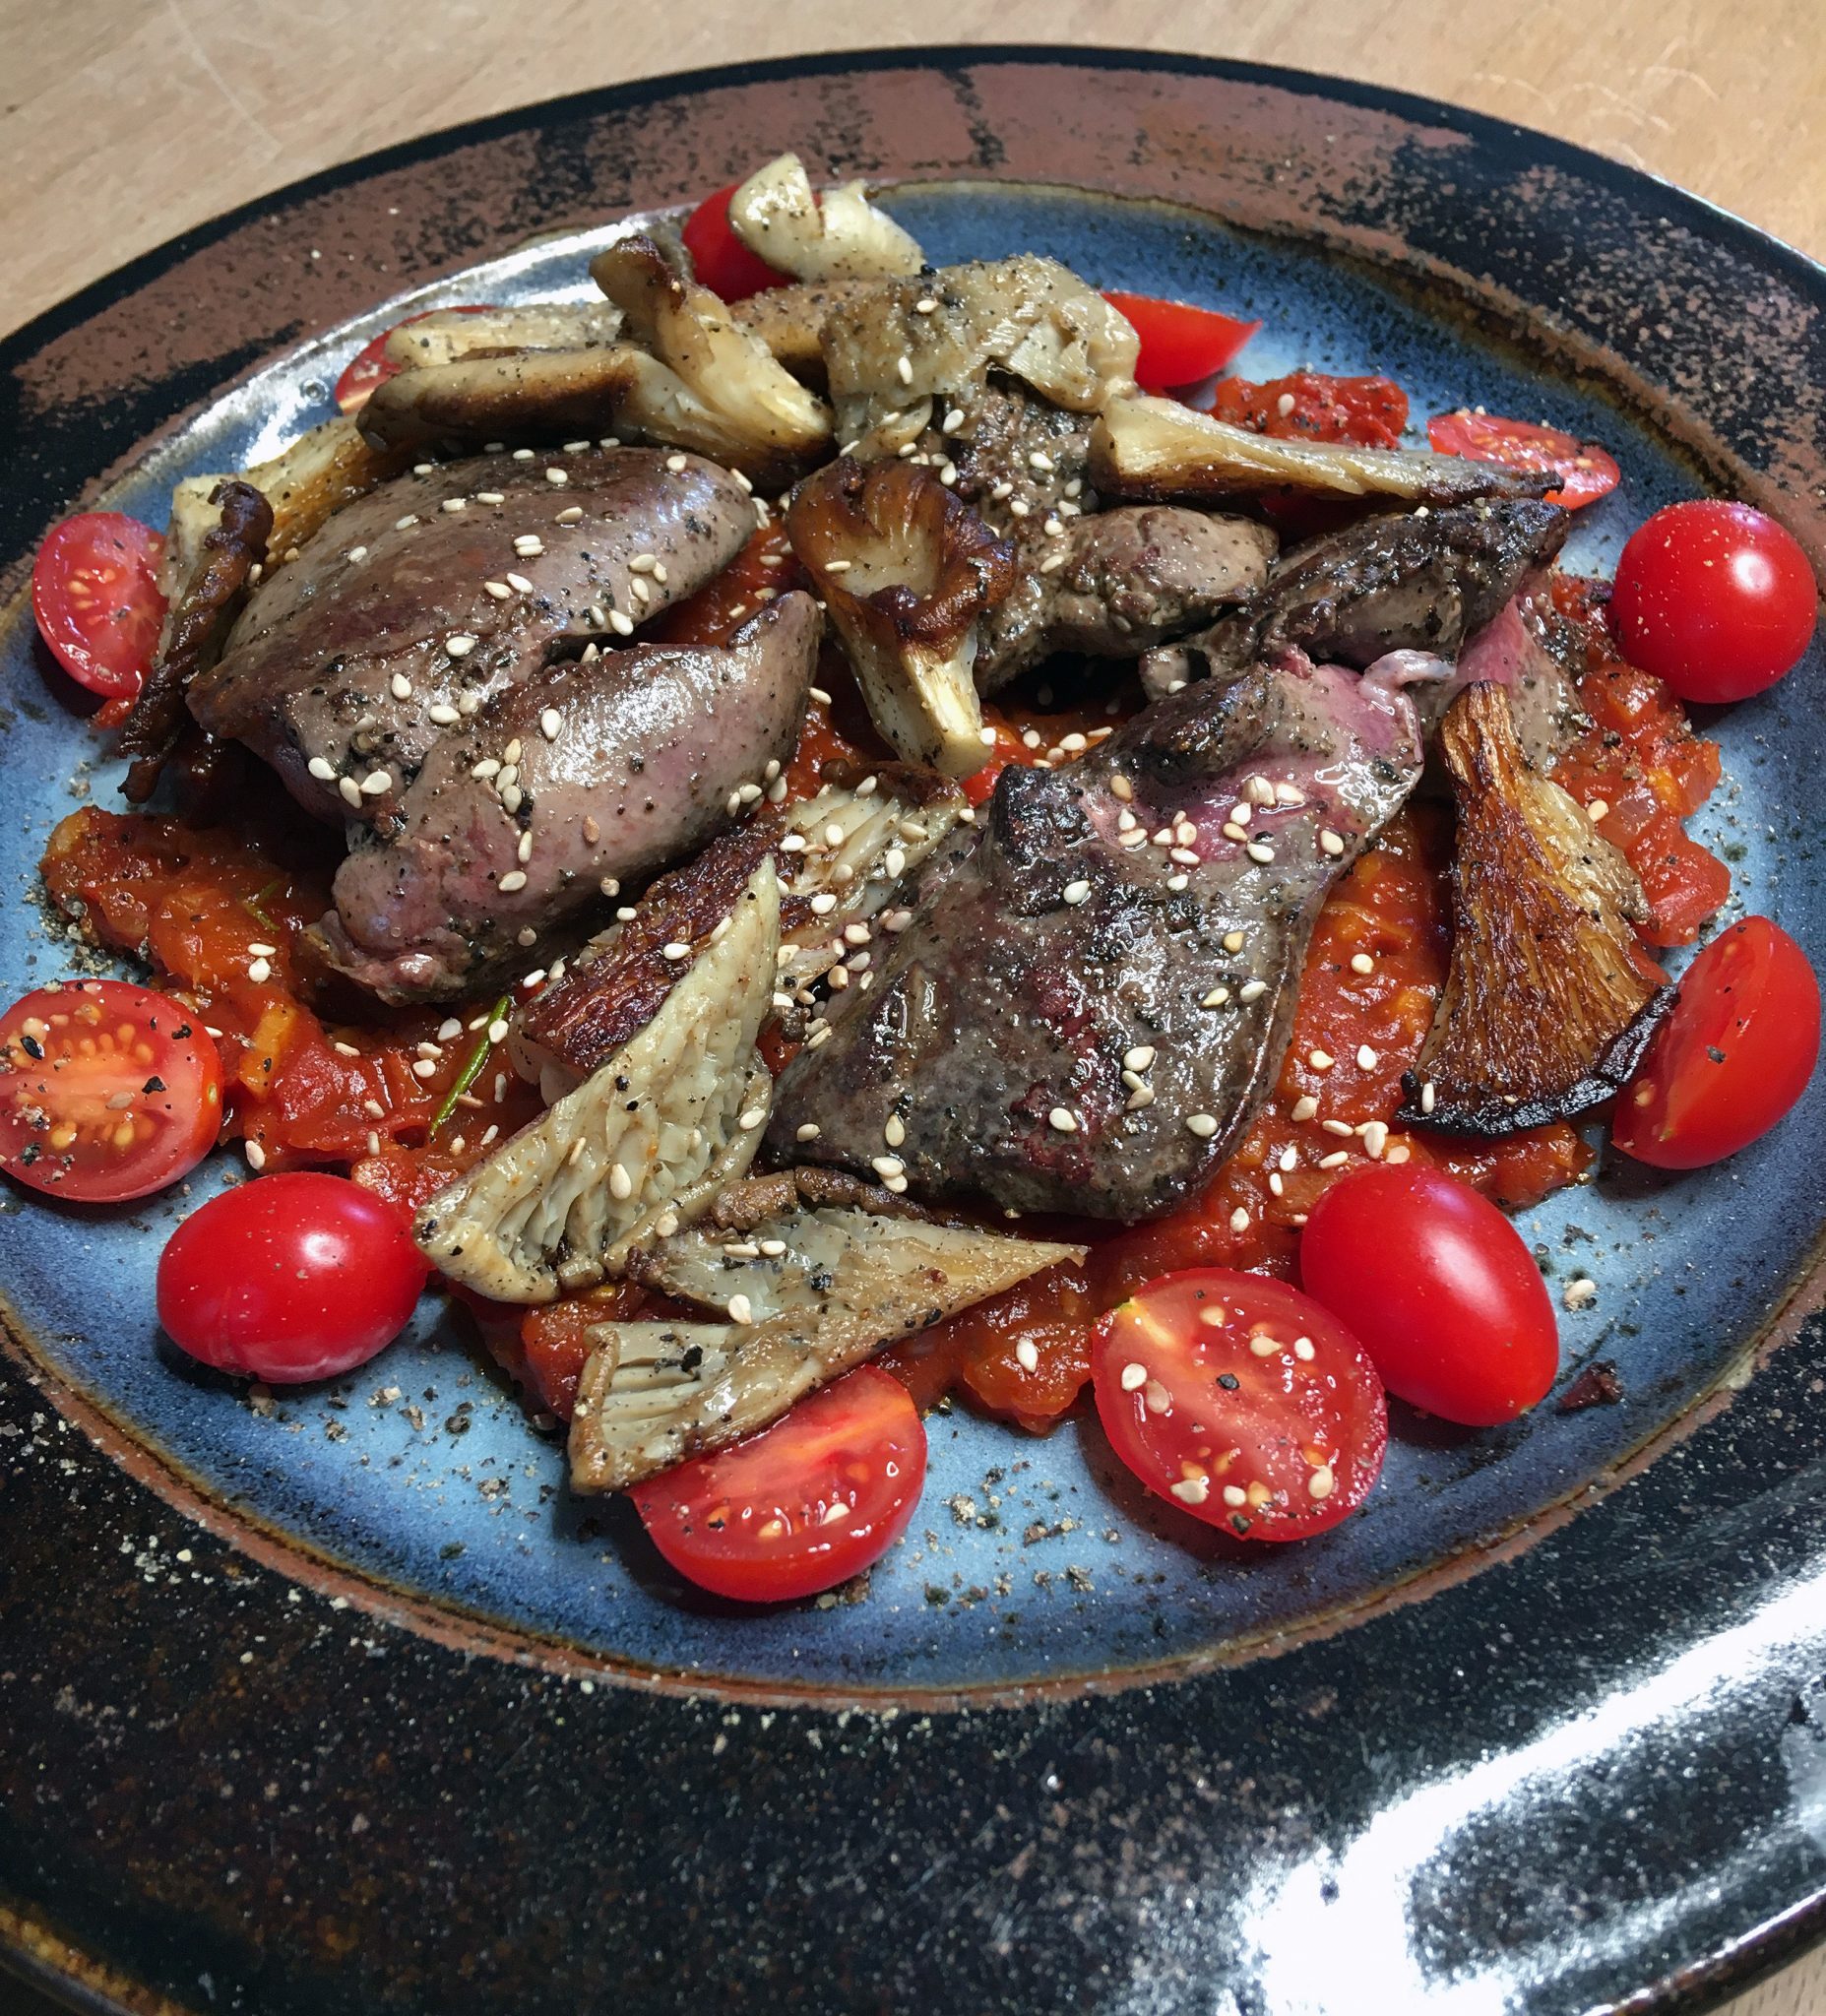 Entenleber mit Austernpilzen auf Tomatensugo - Olafs Gourmet Notizen